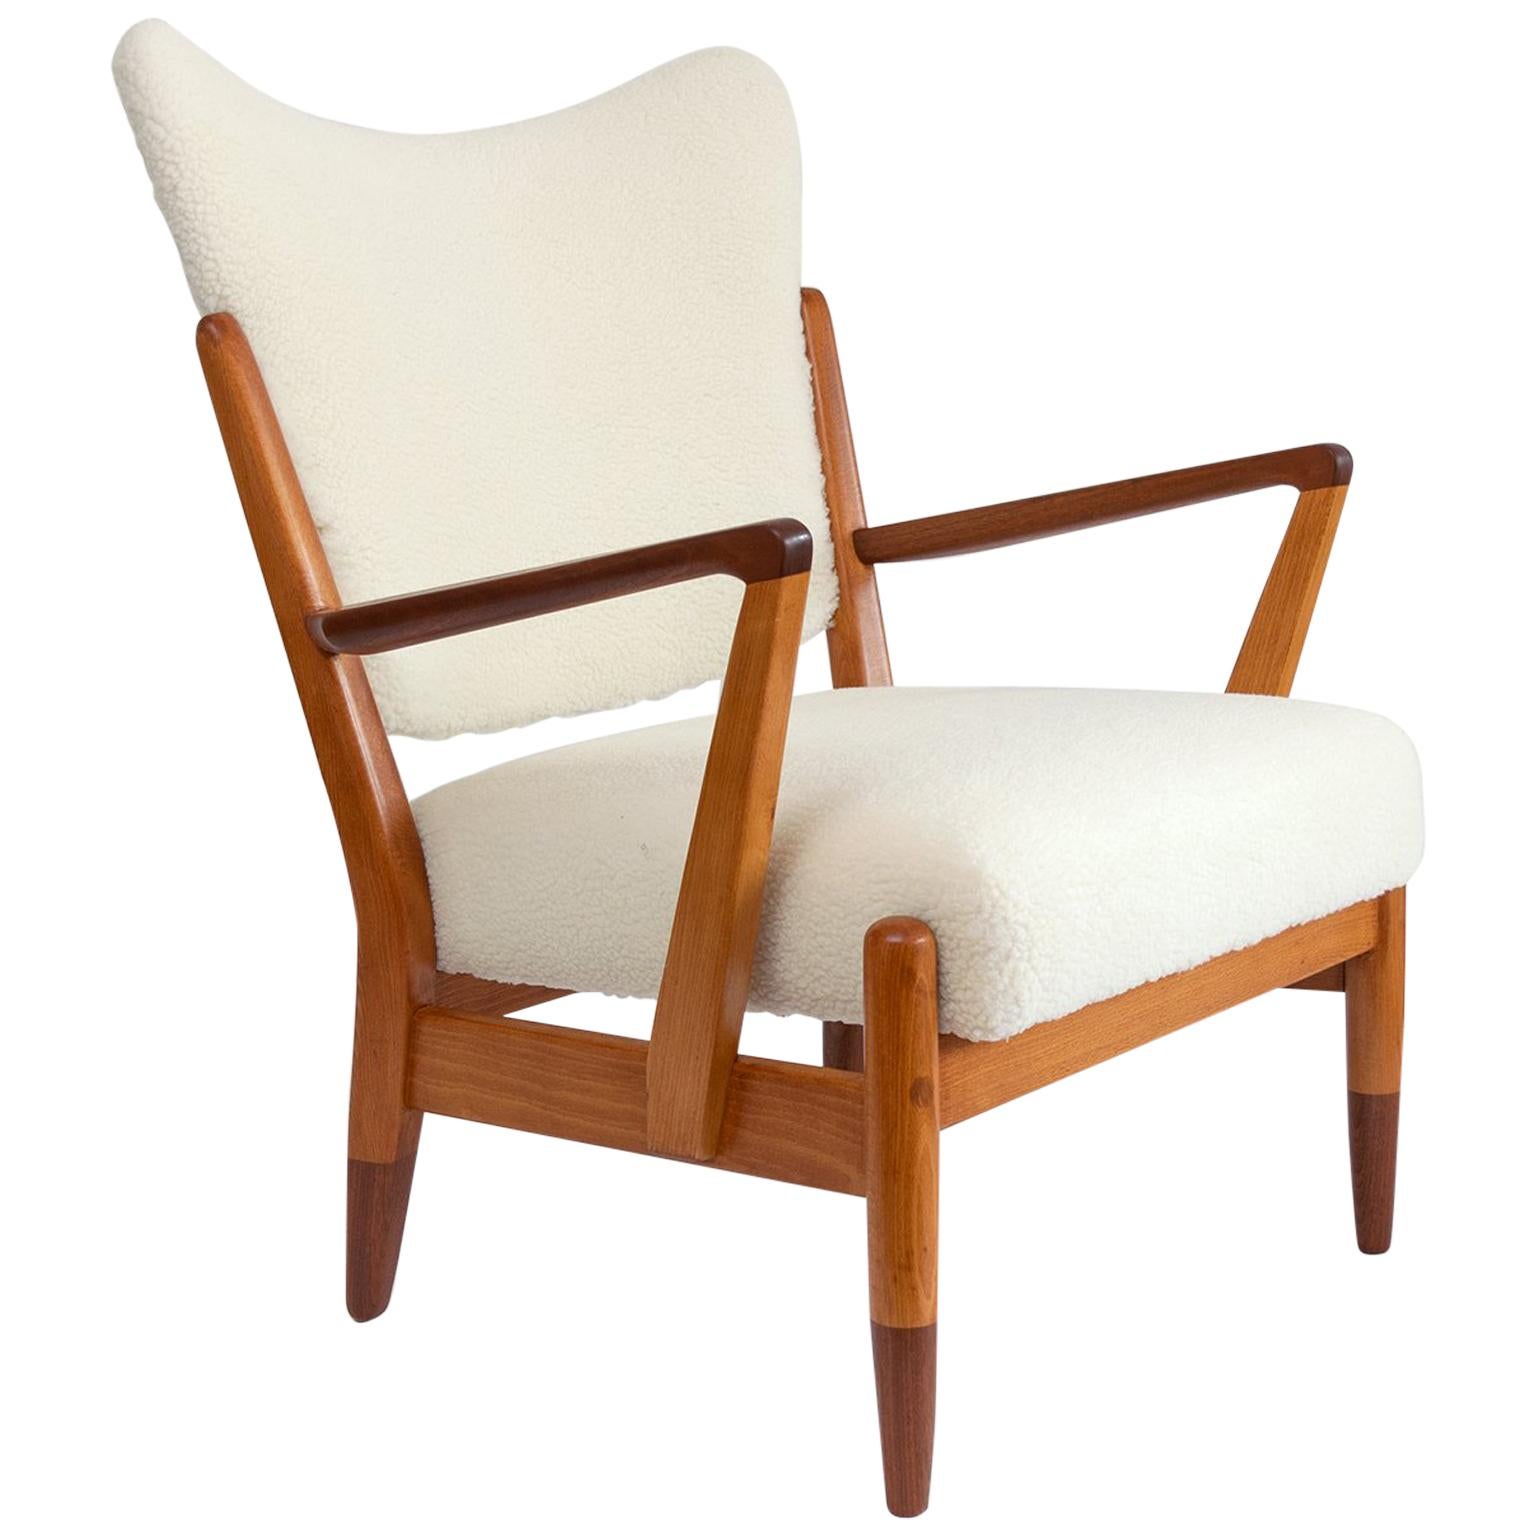 Scandinavian, Modern Lounge Chair Elmwood and Teak Frame with Faux Sheepskin